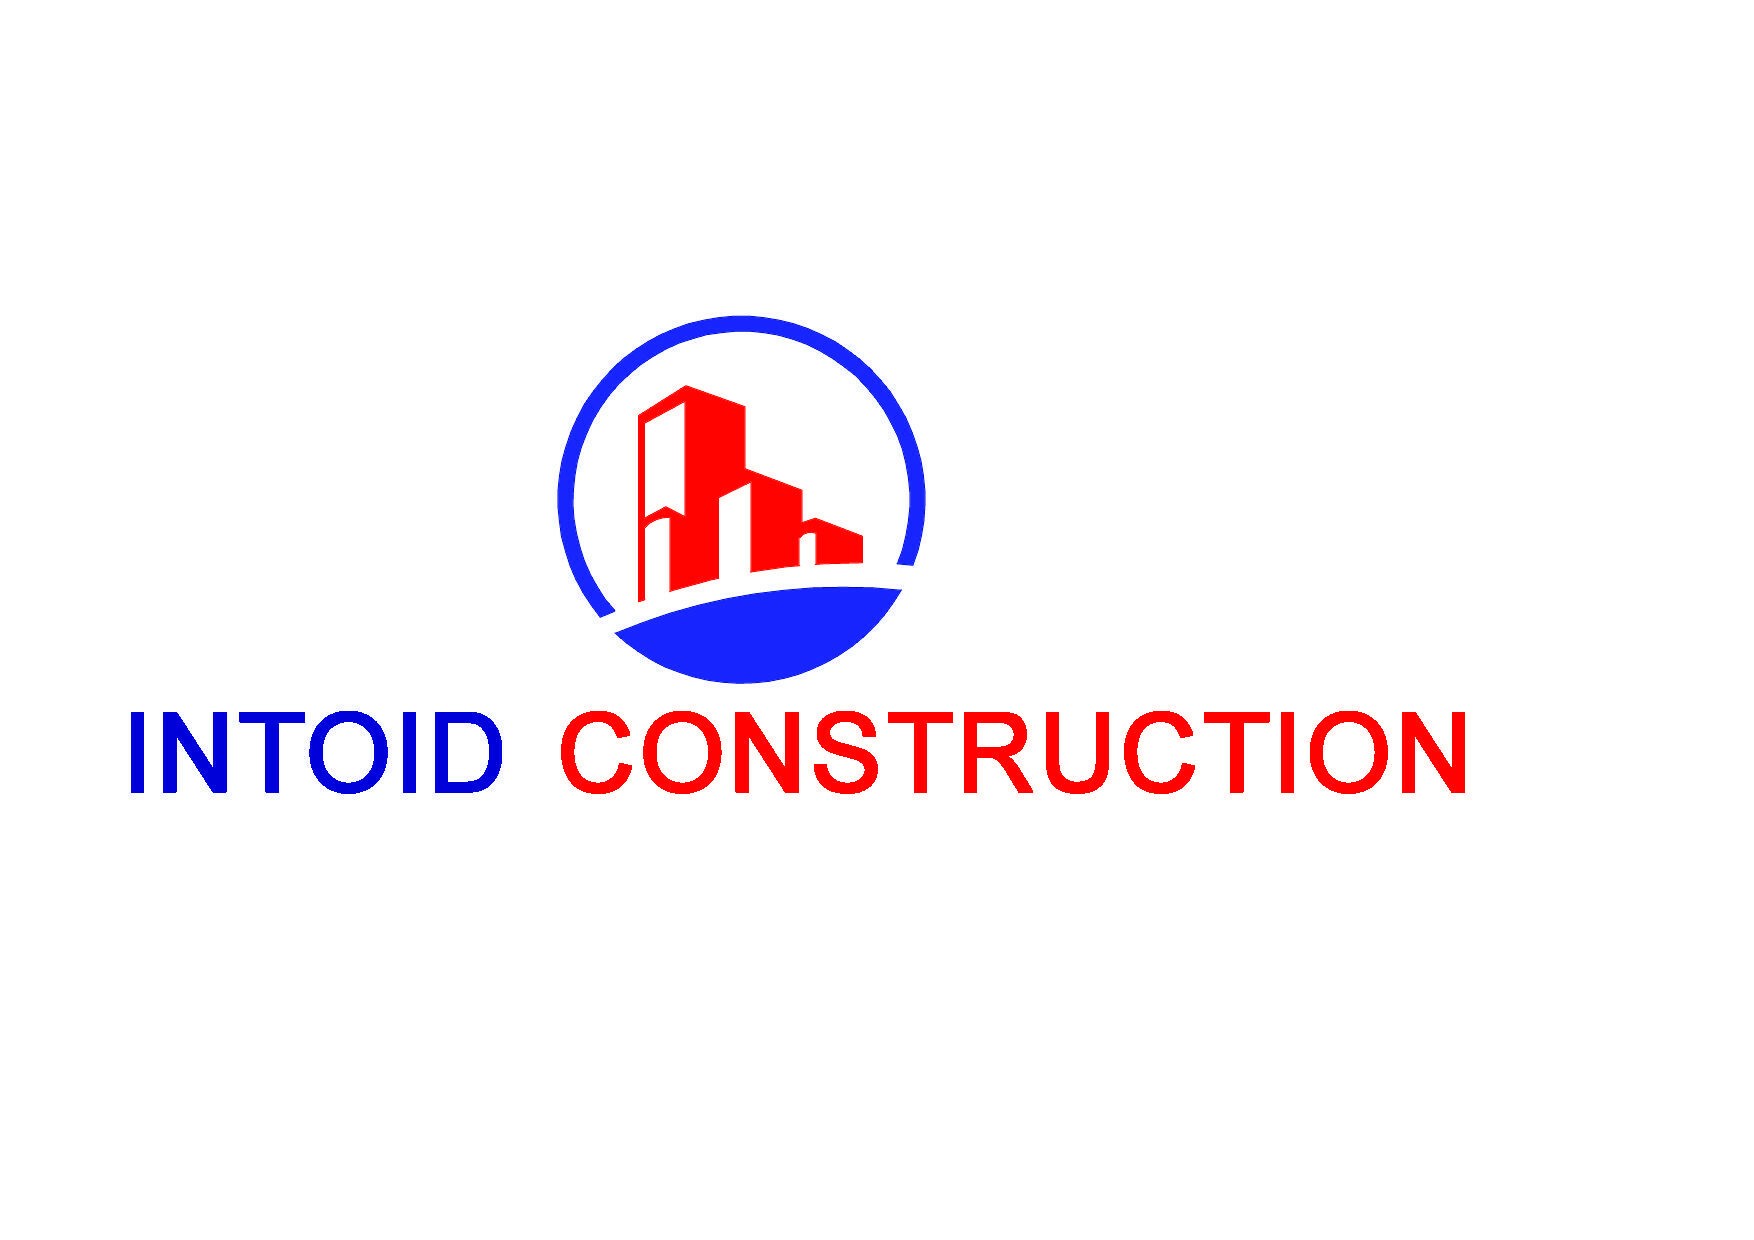 Intoid Construction